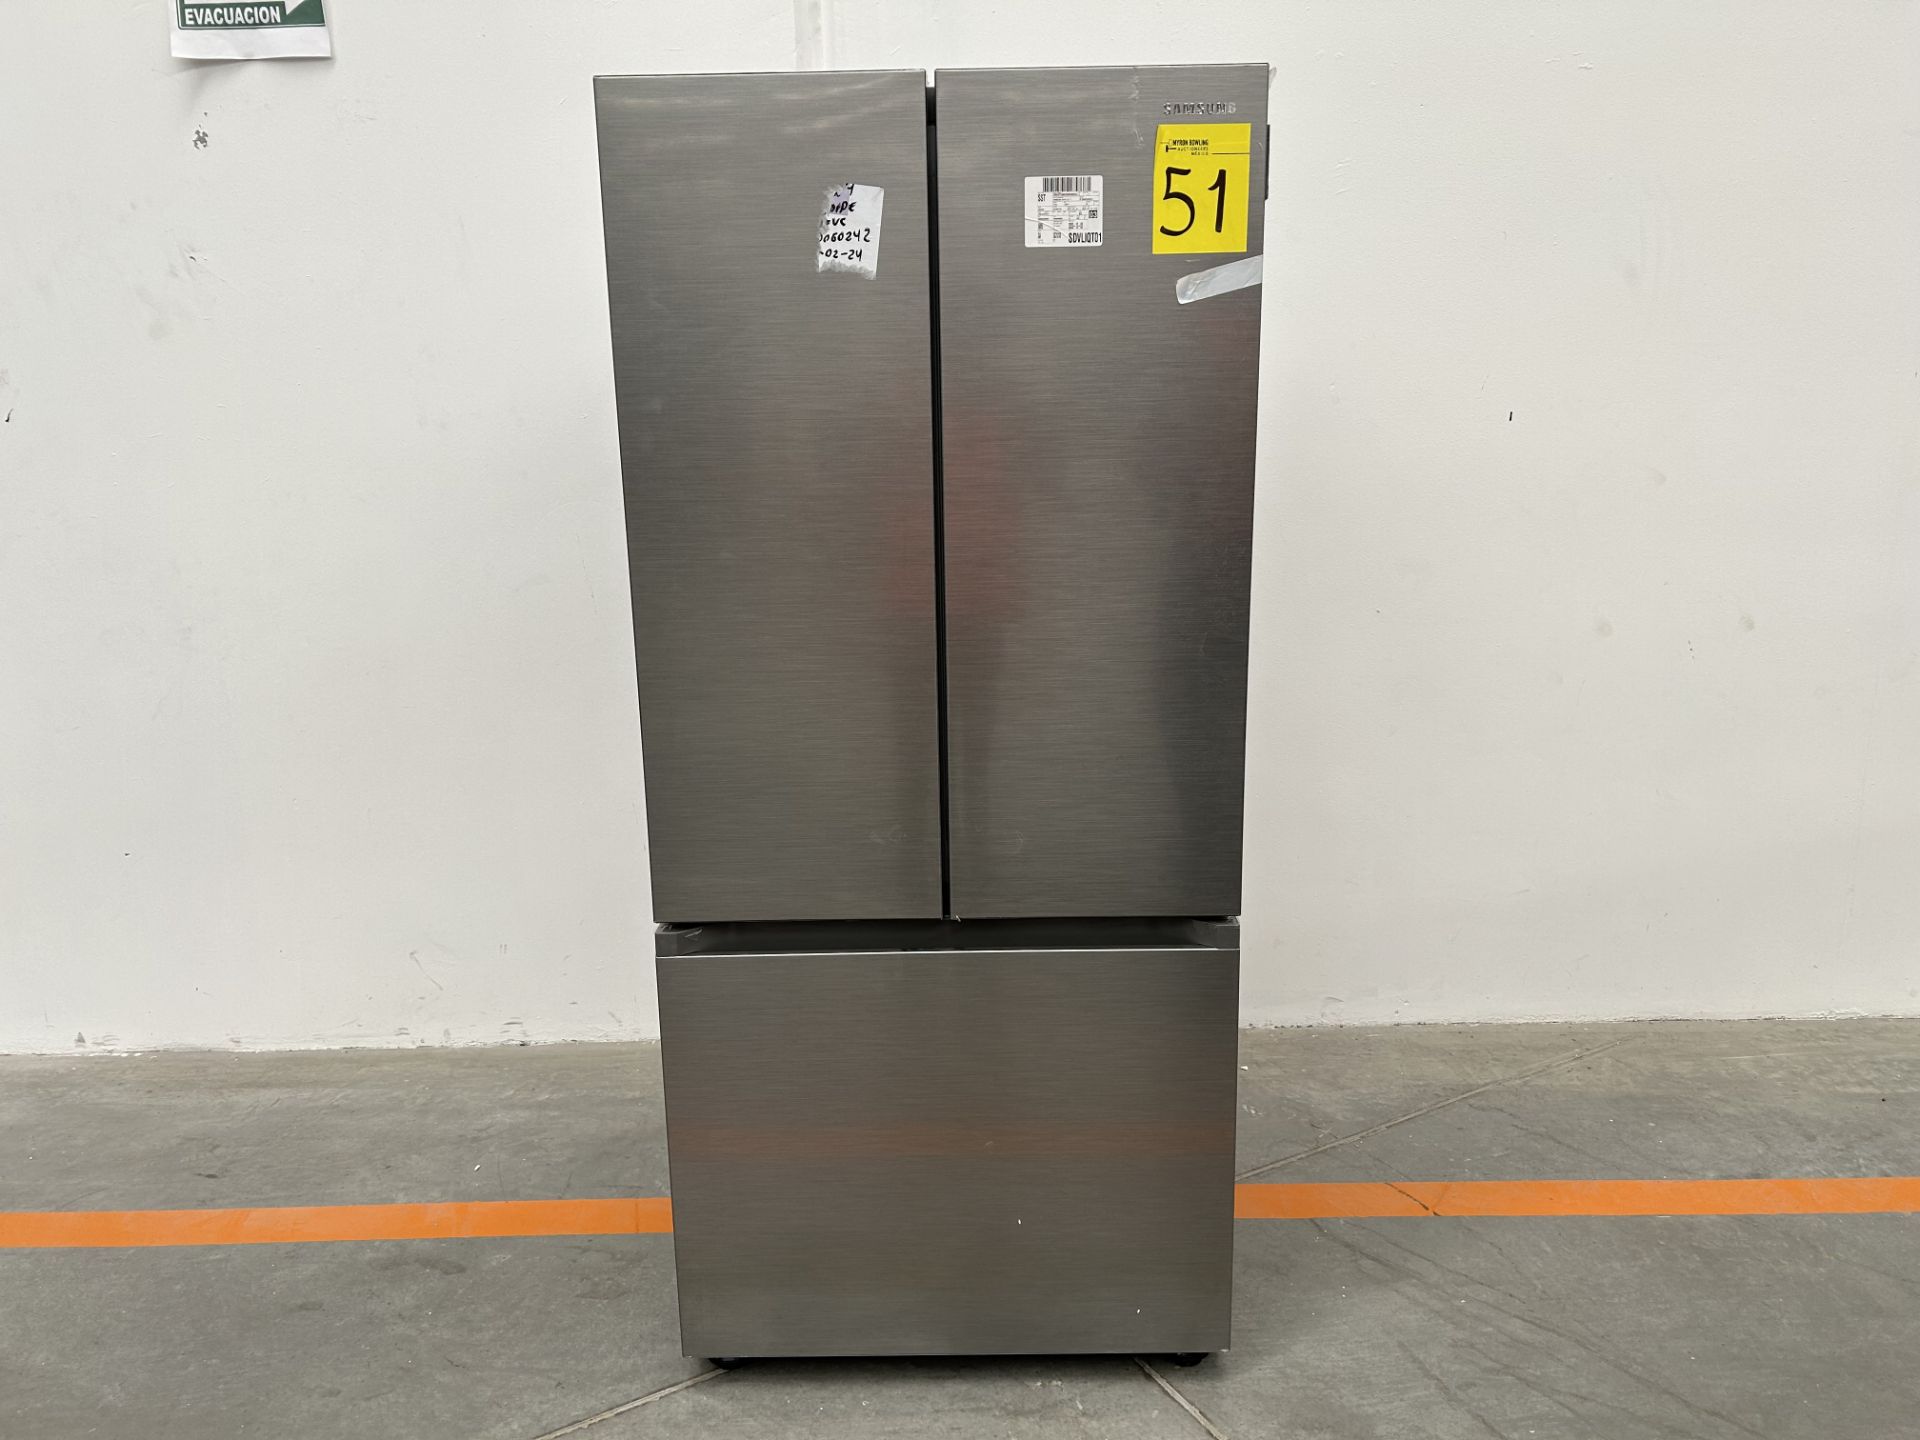 (NUEVO) Refrigerador Marca SAMSUNG, Modelo RF22A410S9, Serie 0016K, Color GRIS